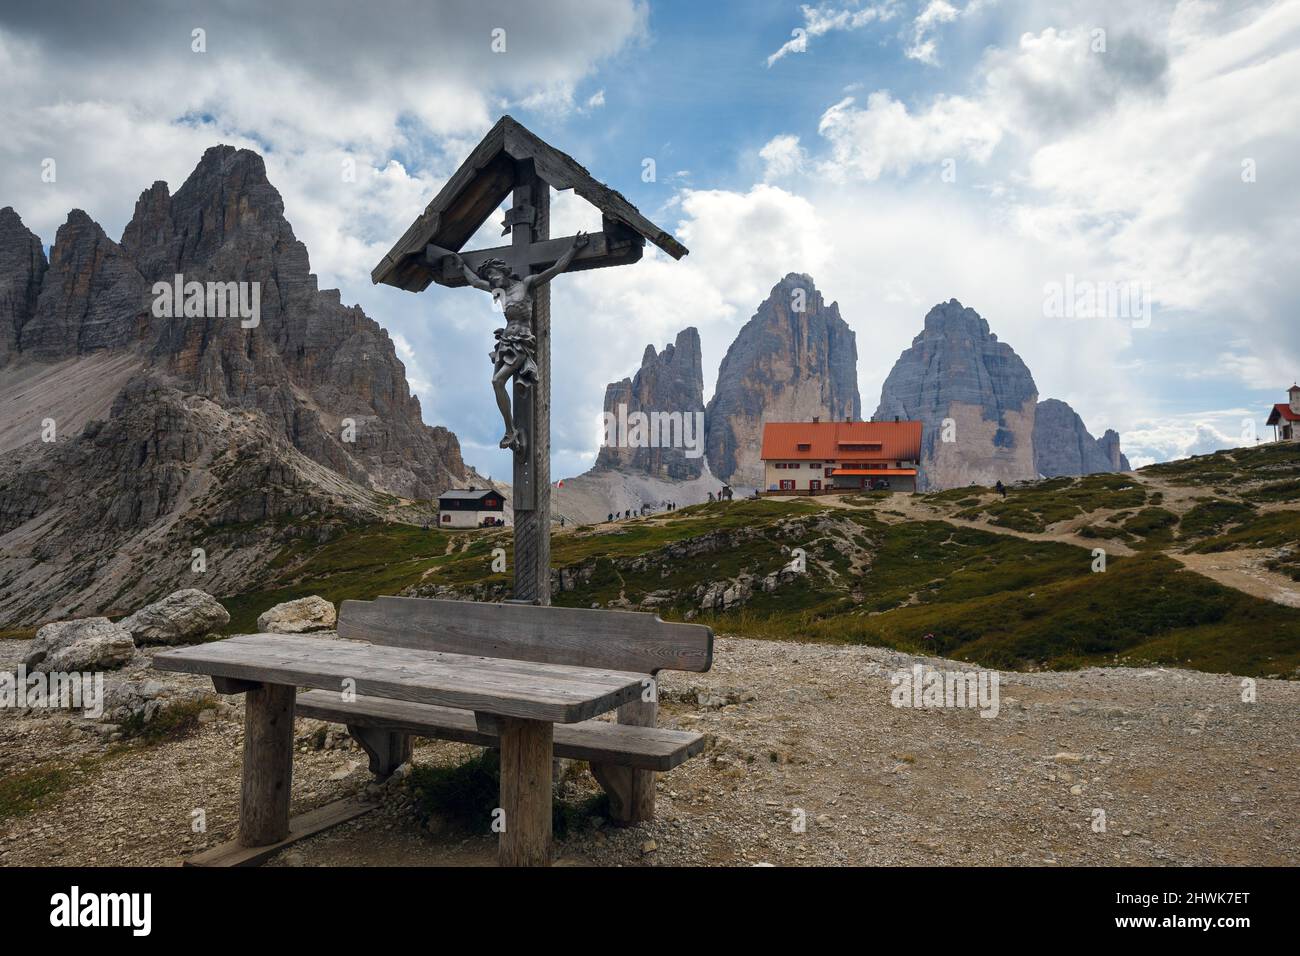 Bench, table and wooden crucifix near the Locatelli alpine refuge. The Paterno and Cime di Lavaredo peaks. The Sesto Dolomites. Italian Alps. Europe. Stock Photo